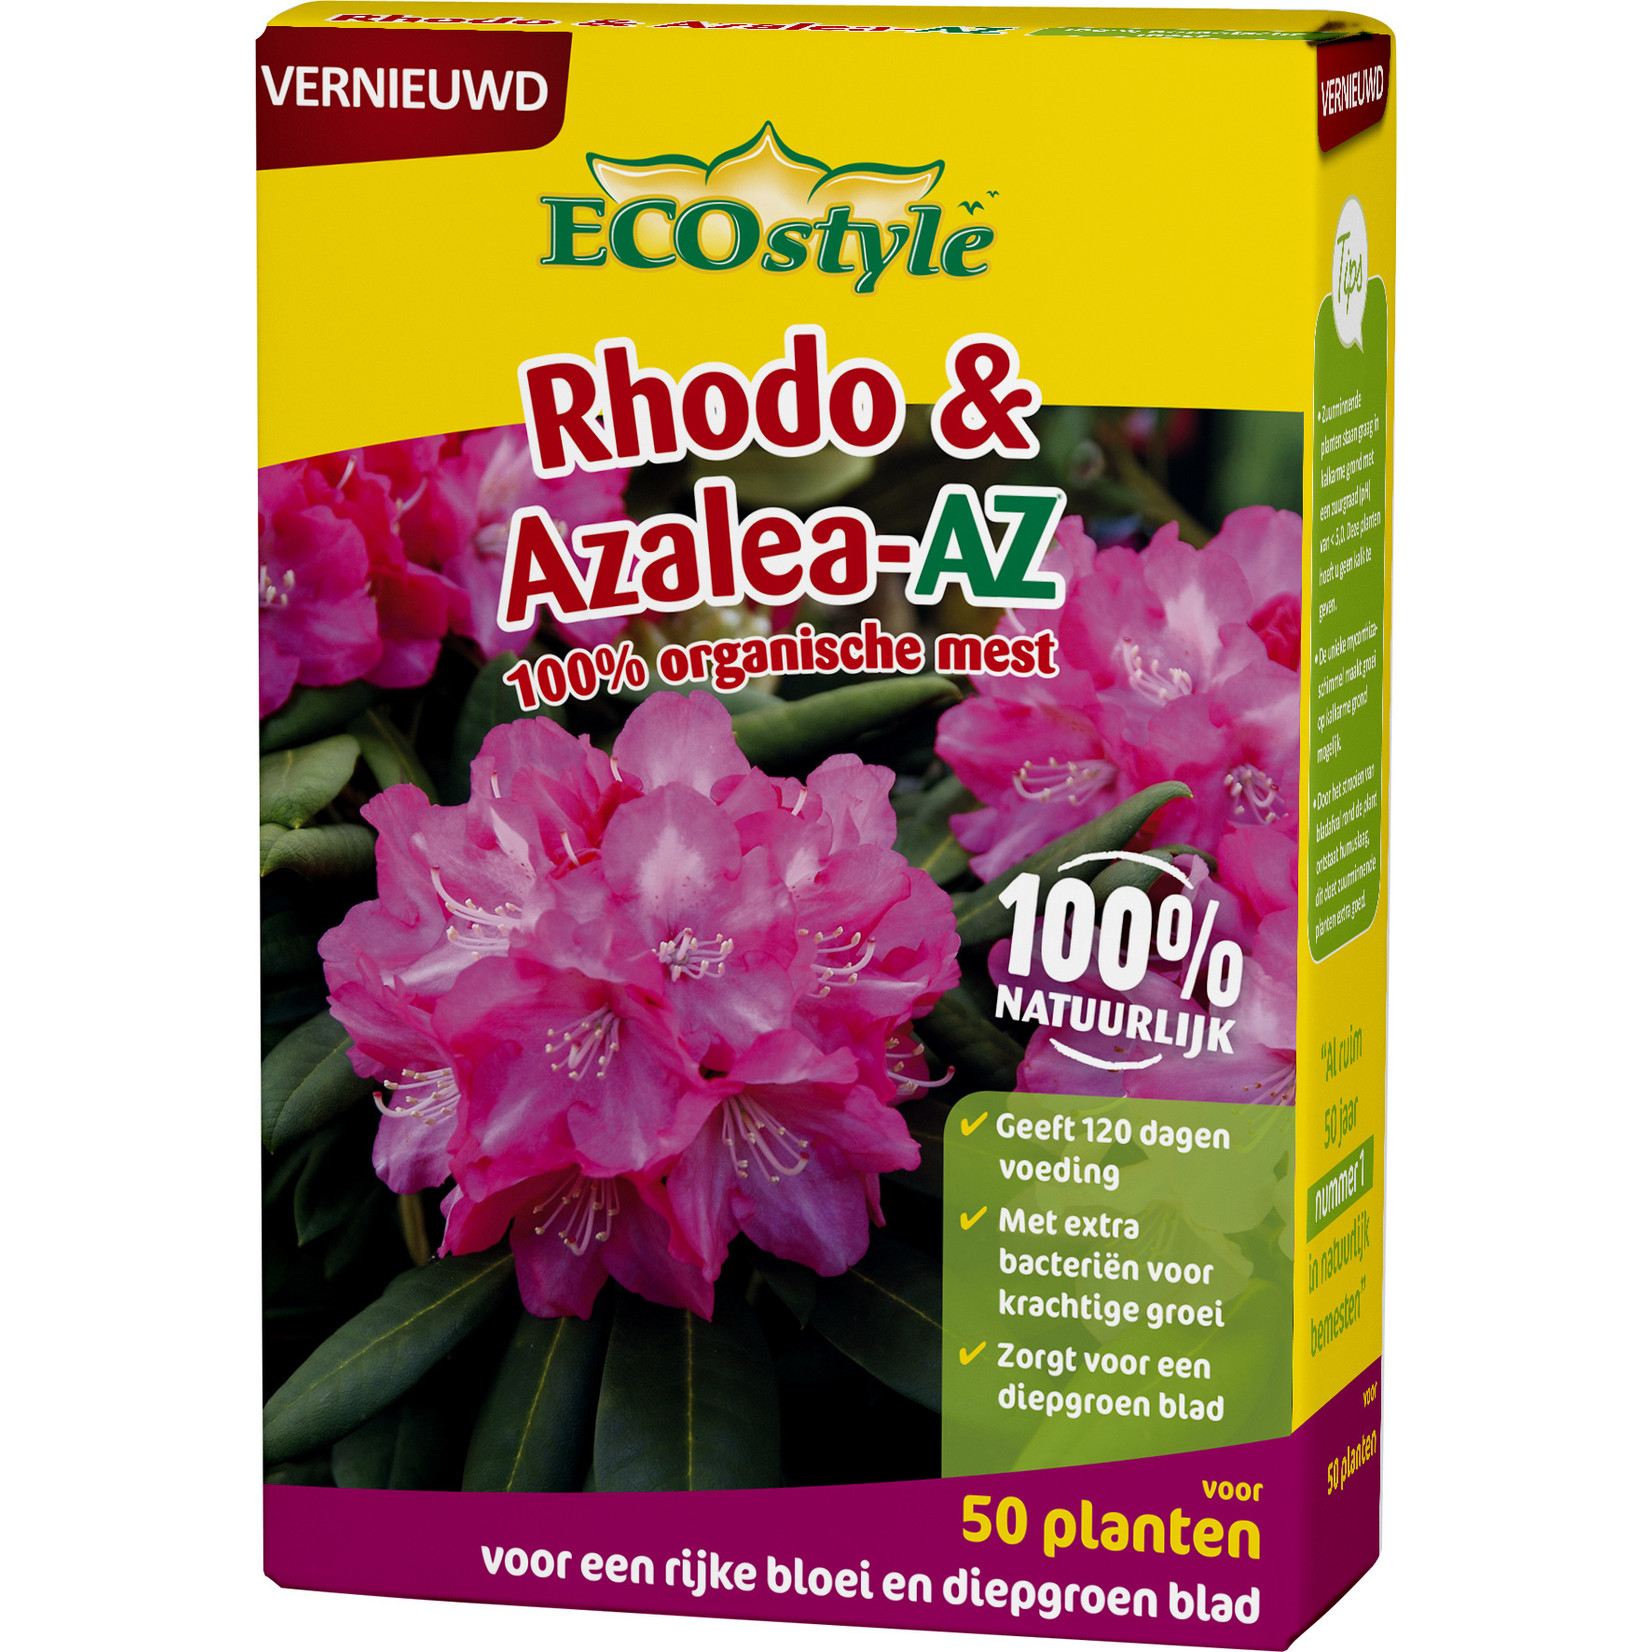 ECOstyle Rhodo & Azalea-AZ meststof 1,6 kg (voor ca. 50 planten)